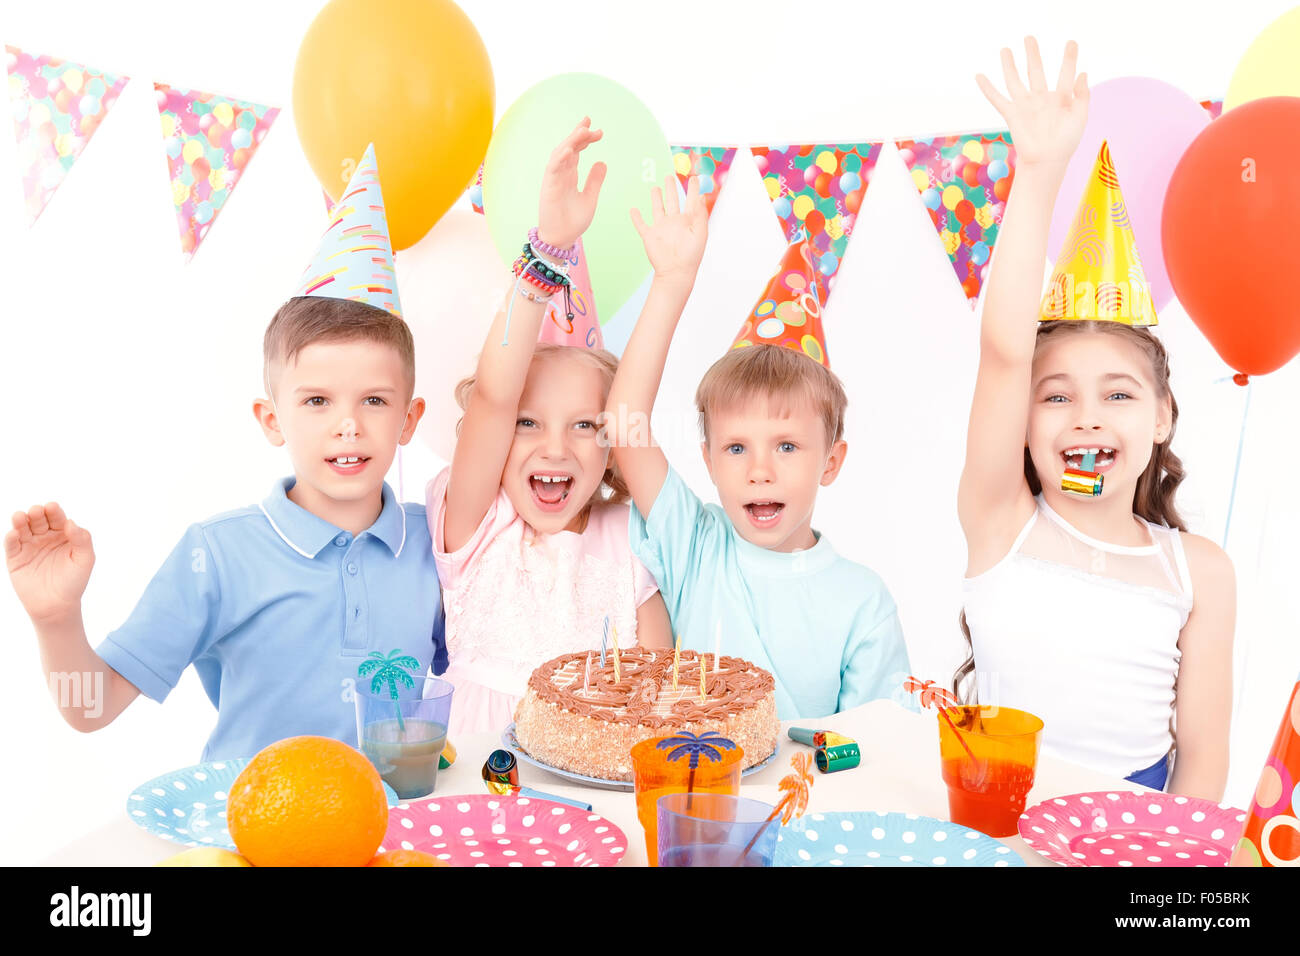 Happy children posing with birthday cake Stock Photo